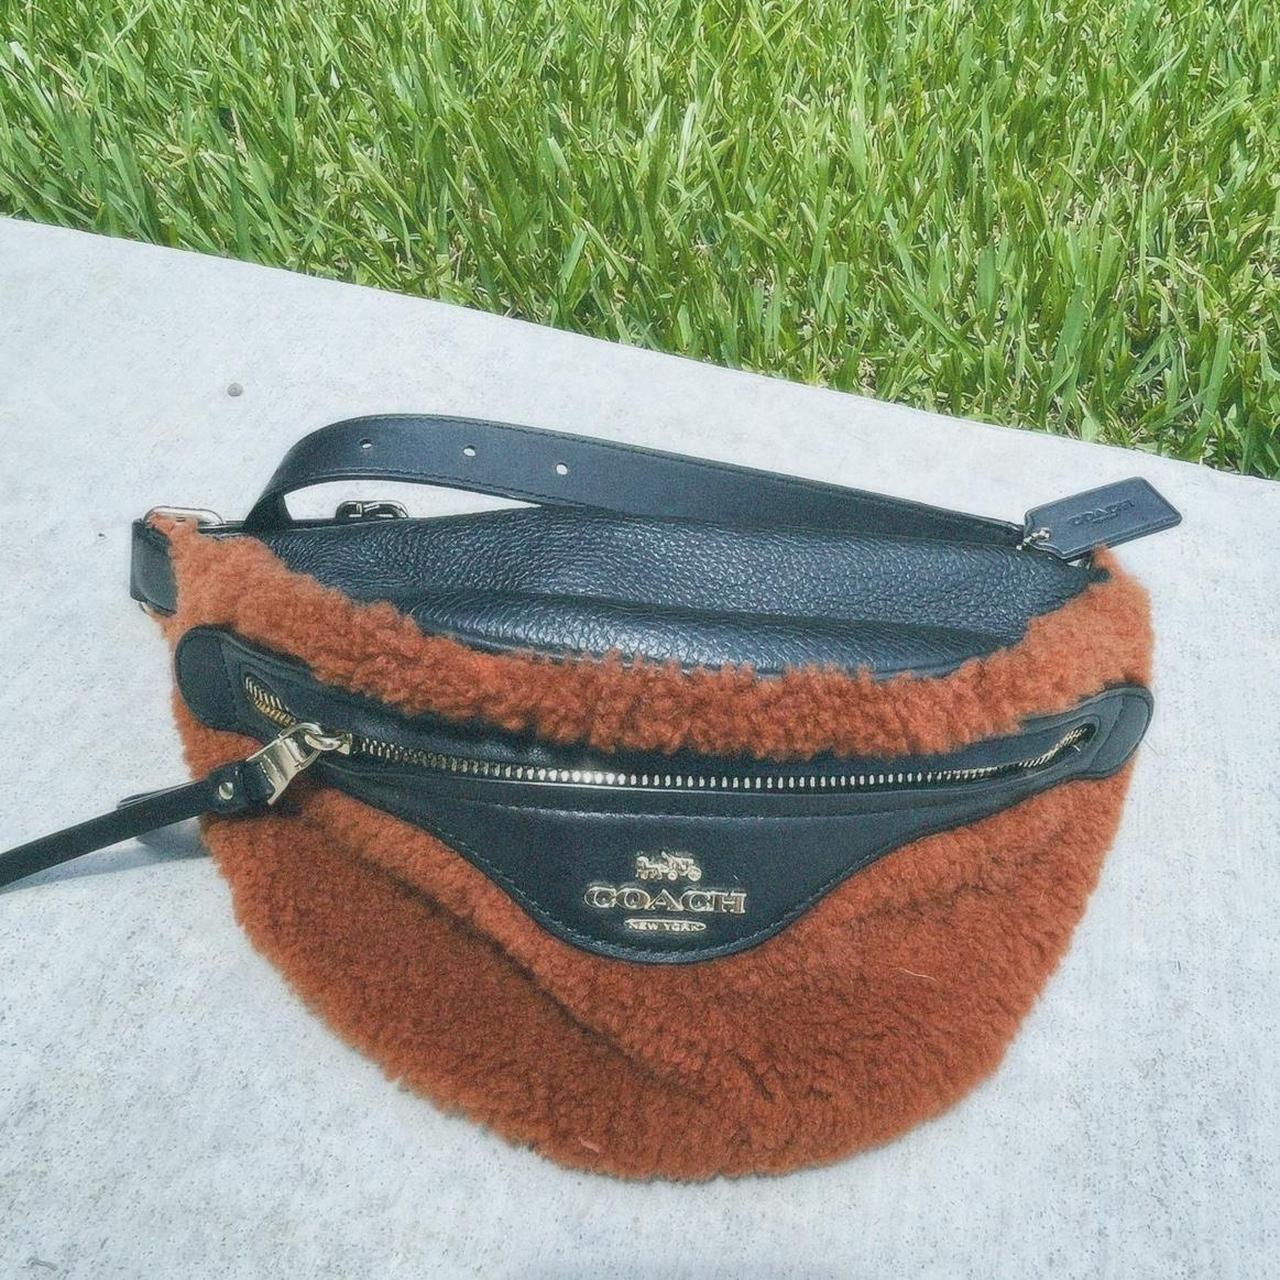 Carhartt Corduroy Belt Bag In Orange